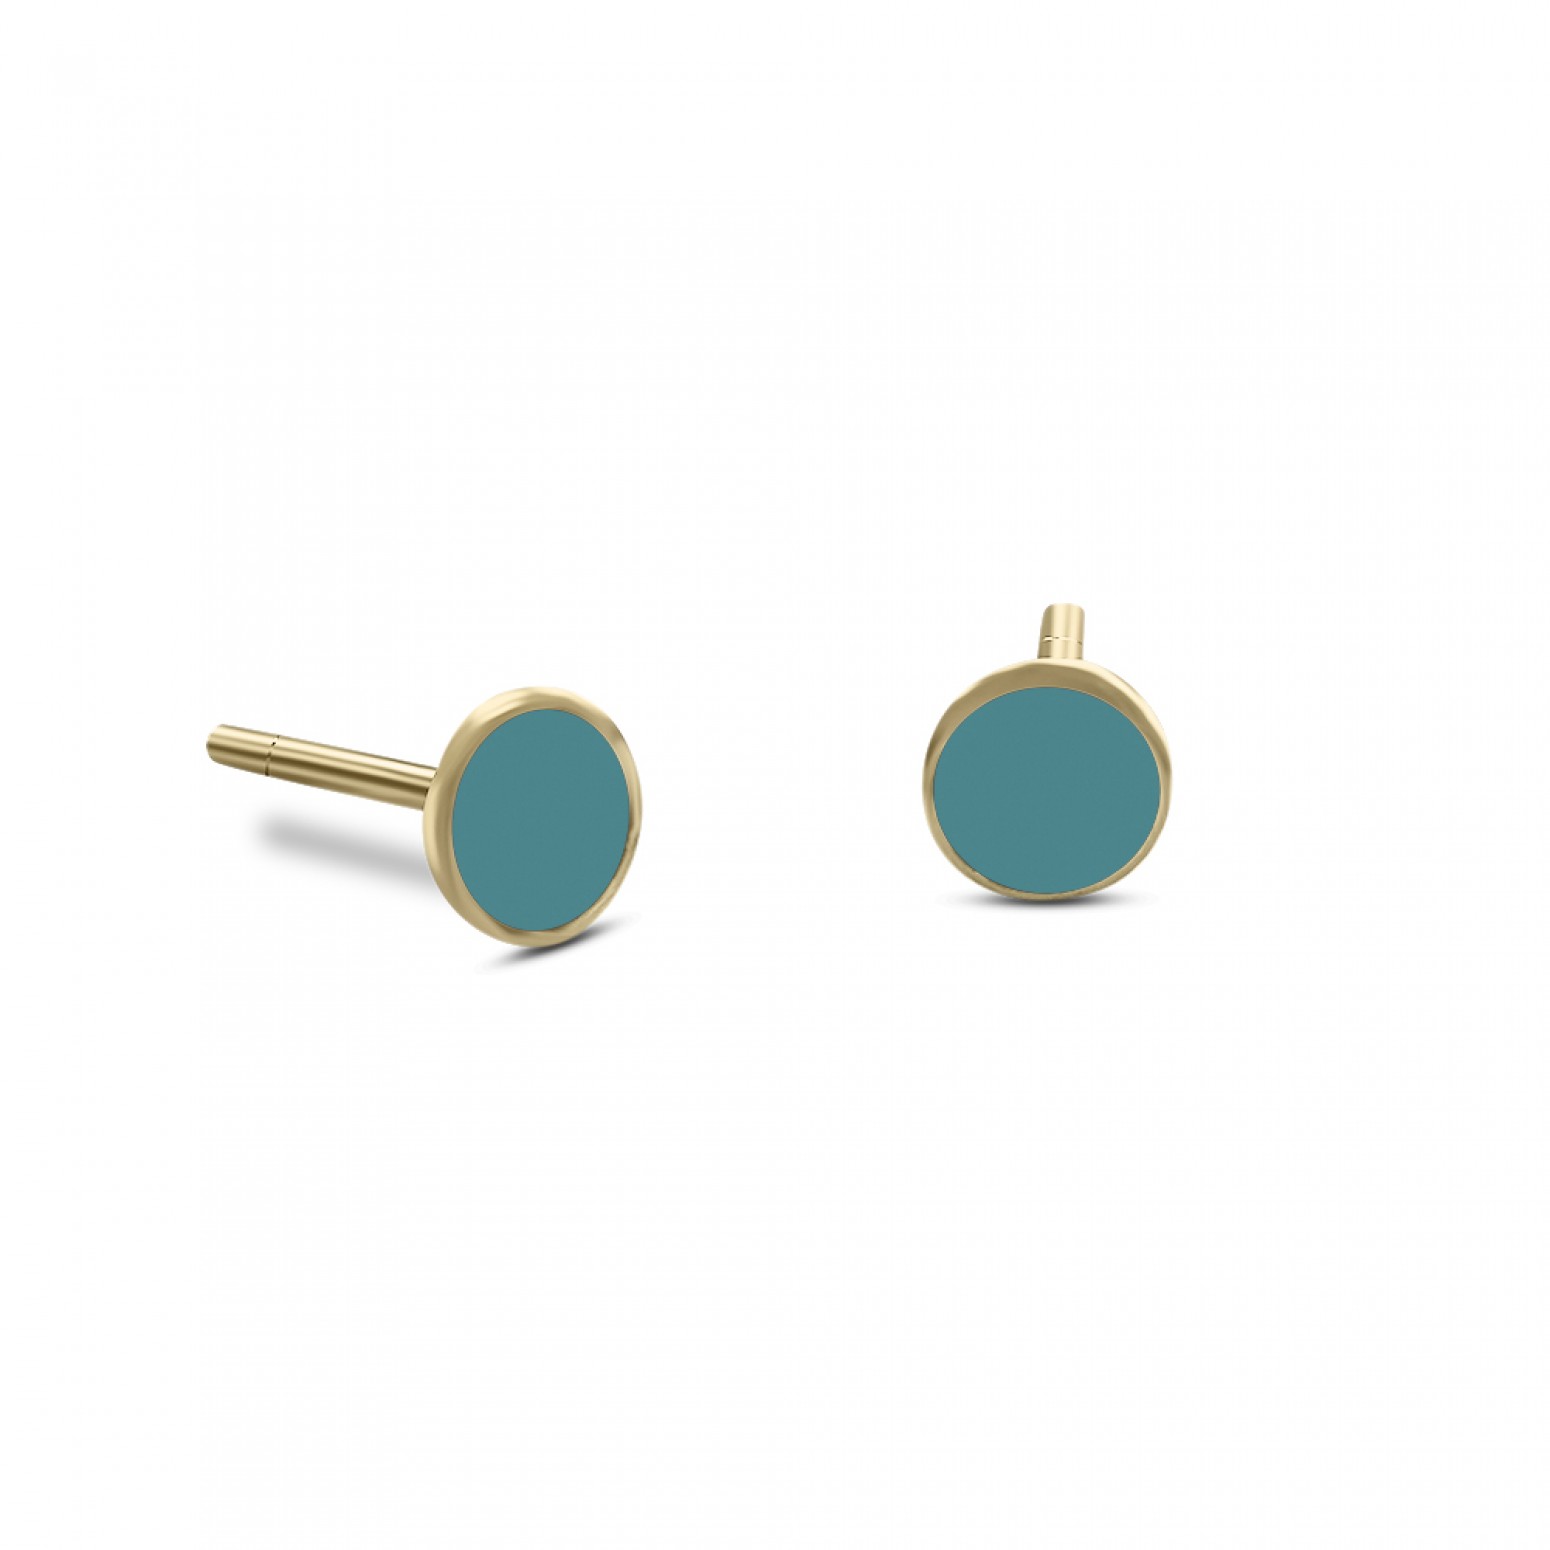 Round baby earrings K9 gold with enamel, ps0140 EARRINGS Κοσμηματα - chrilia.gr